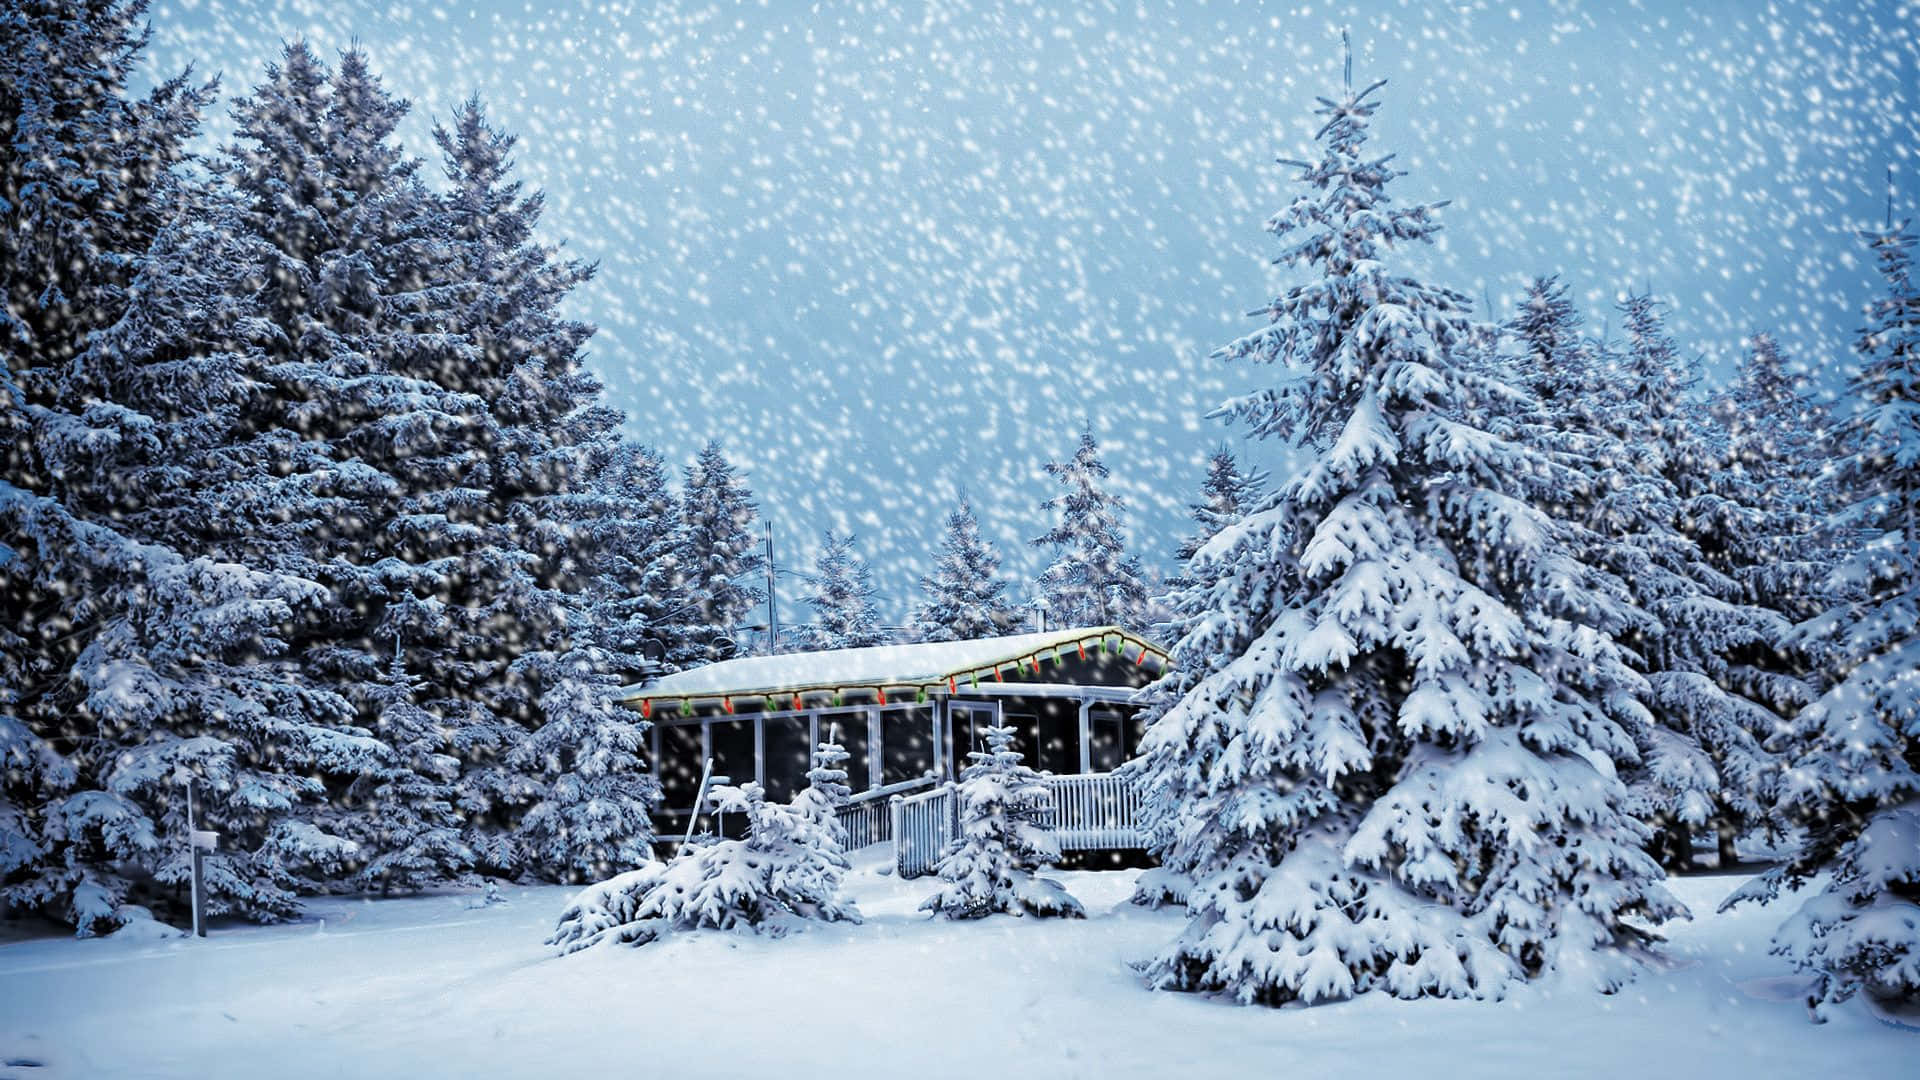 "'Tis the Season! Celebrate Winter Christmas with this Festive Desktop Design" Wallpaper